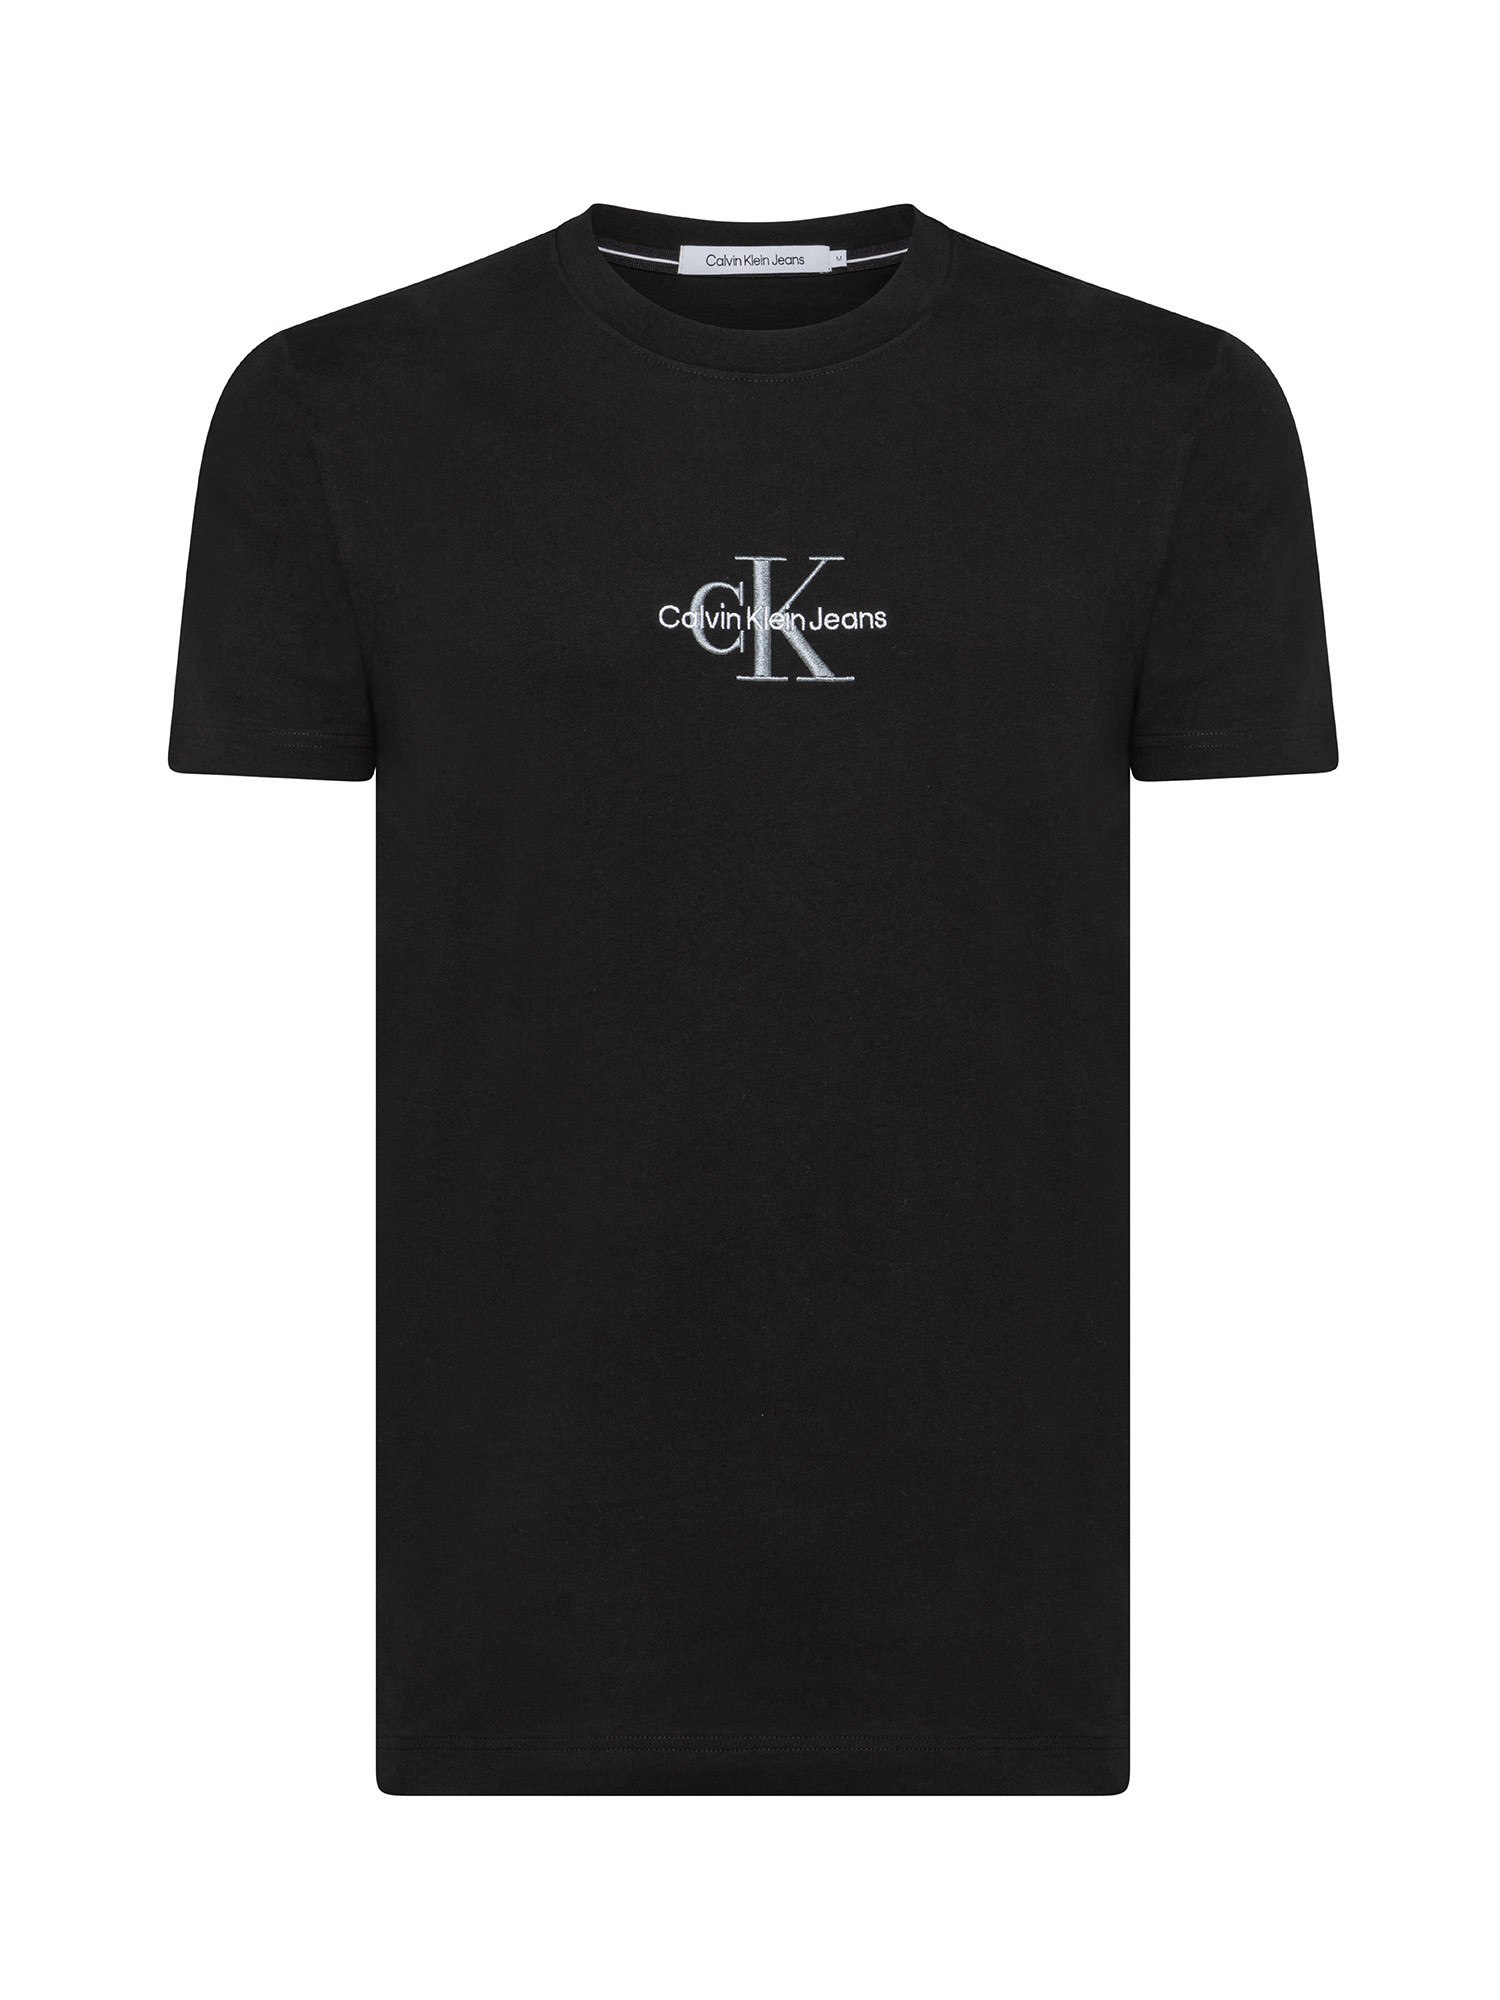 Cotton T-shirt with logo, Black, large image number 0